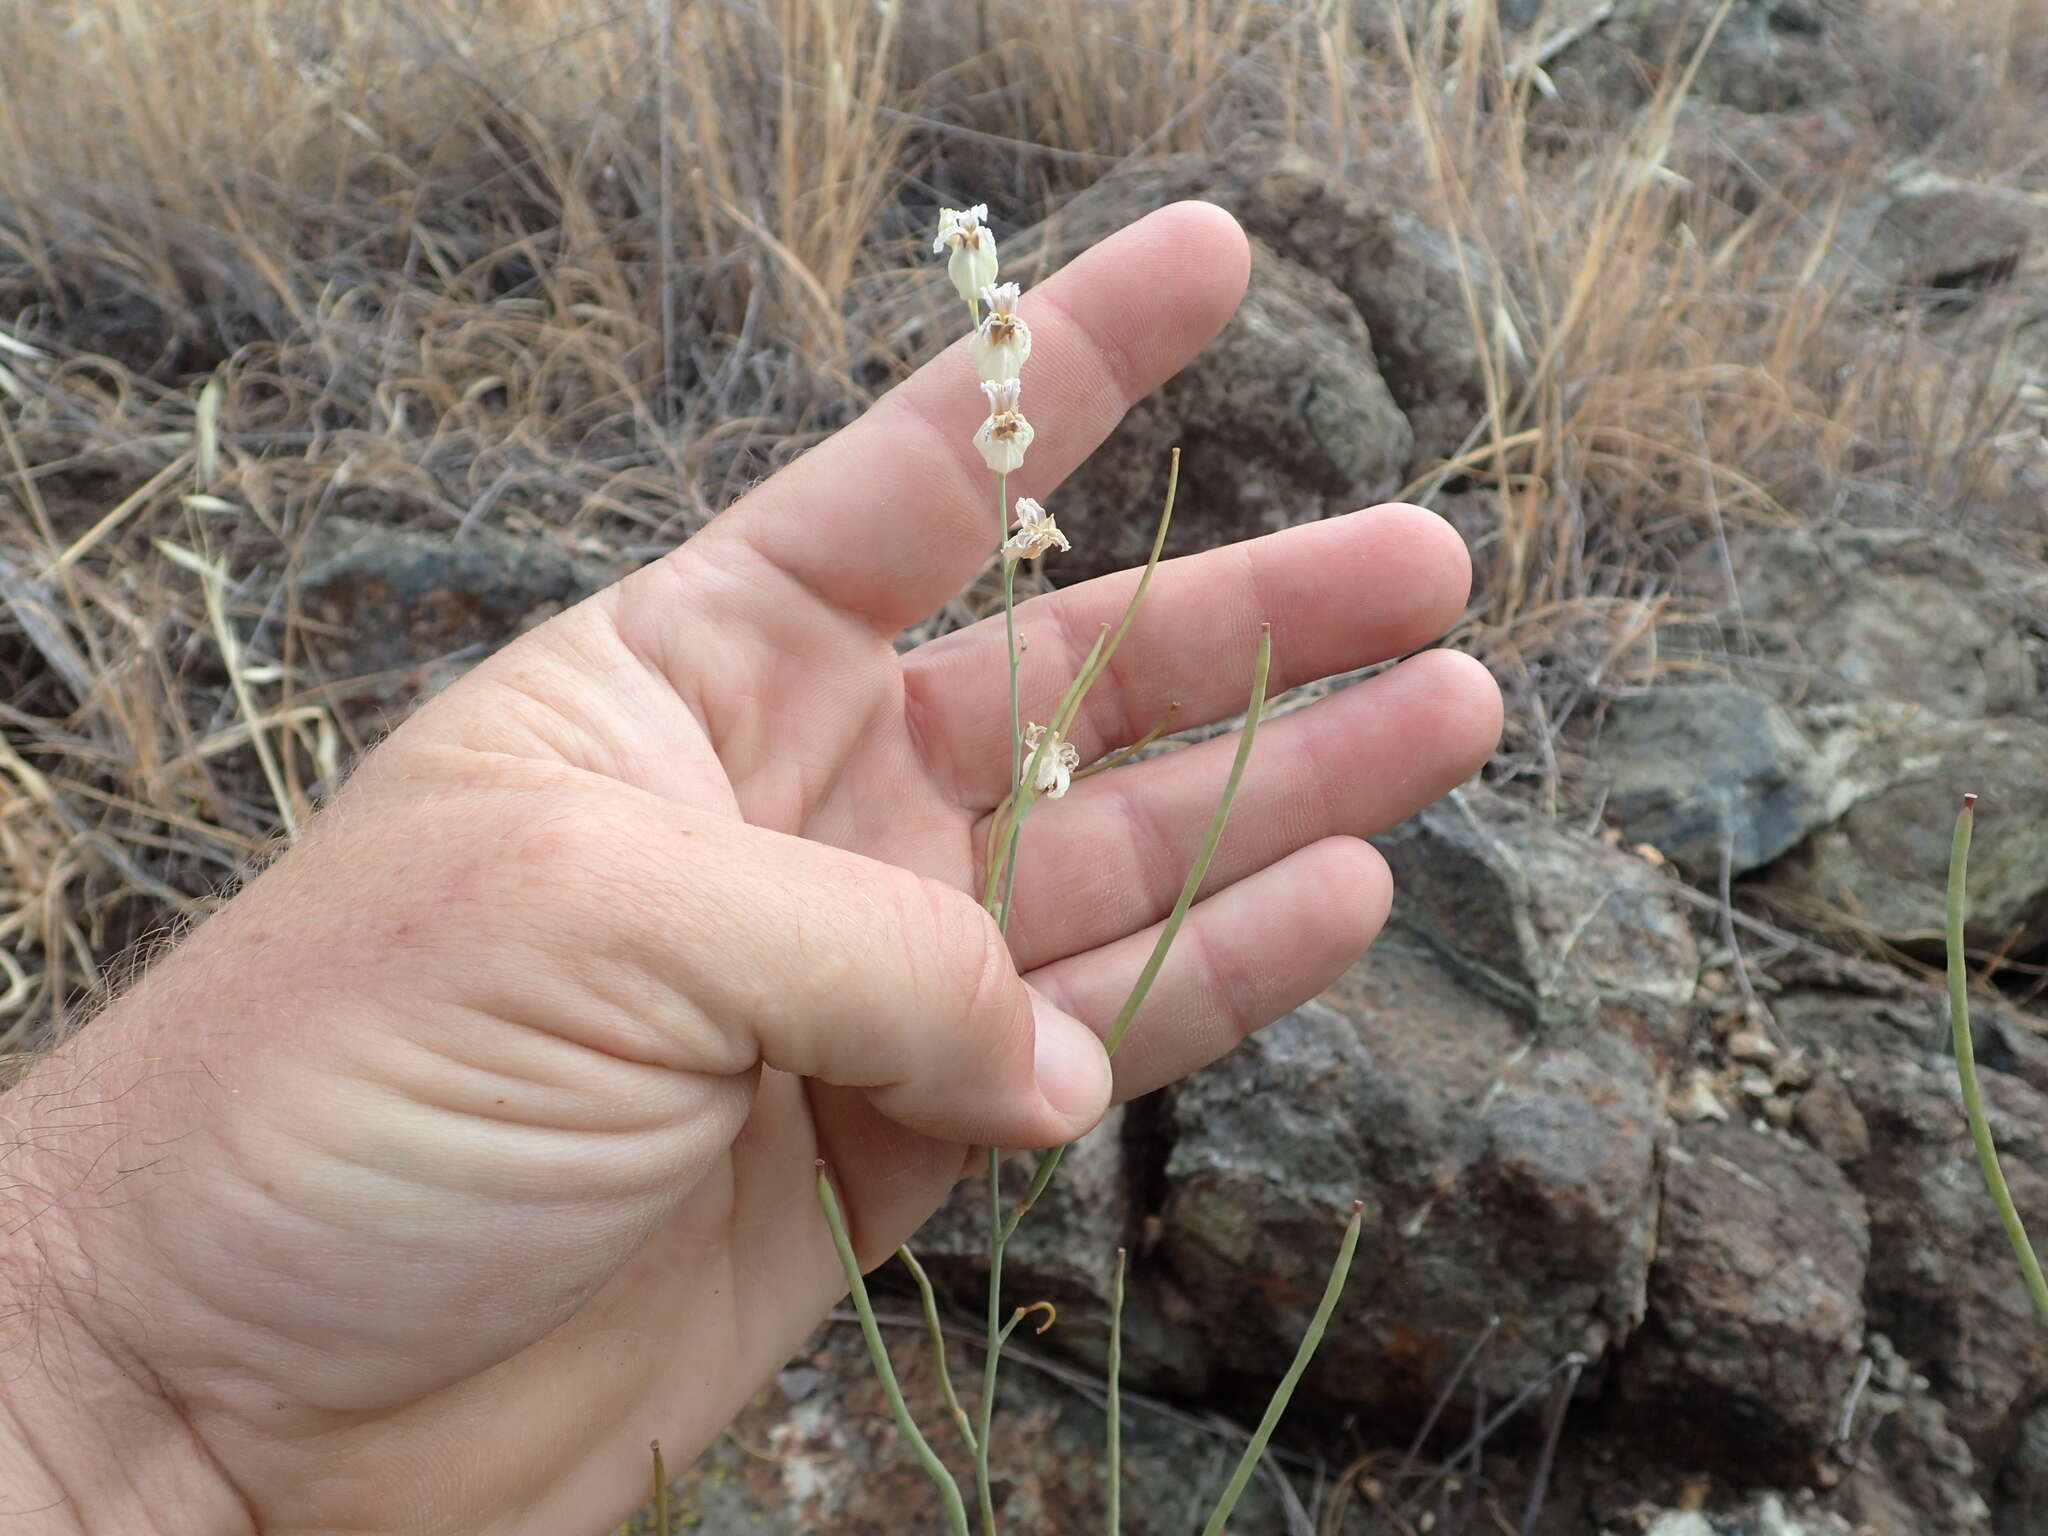 Image of Metcalf Canyon jewelflower